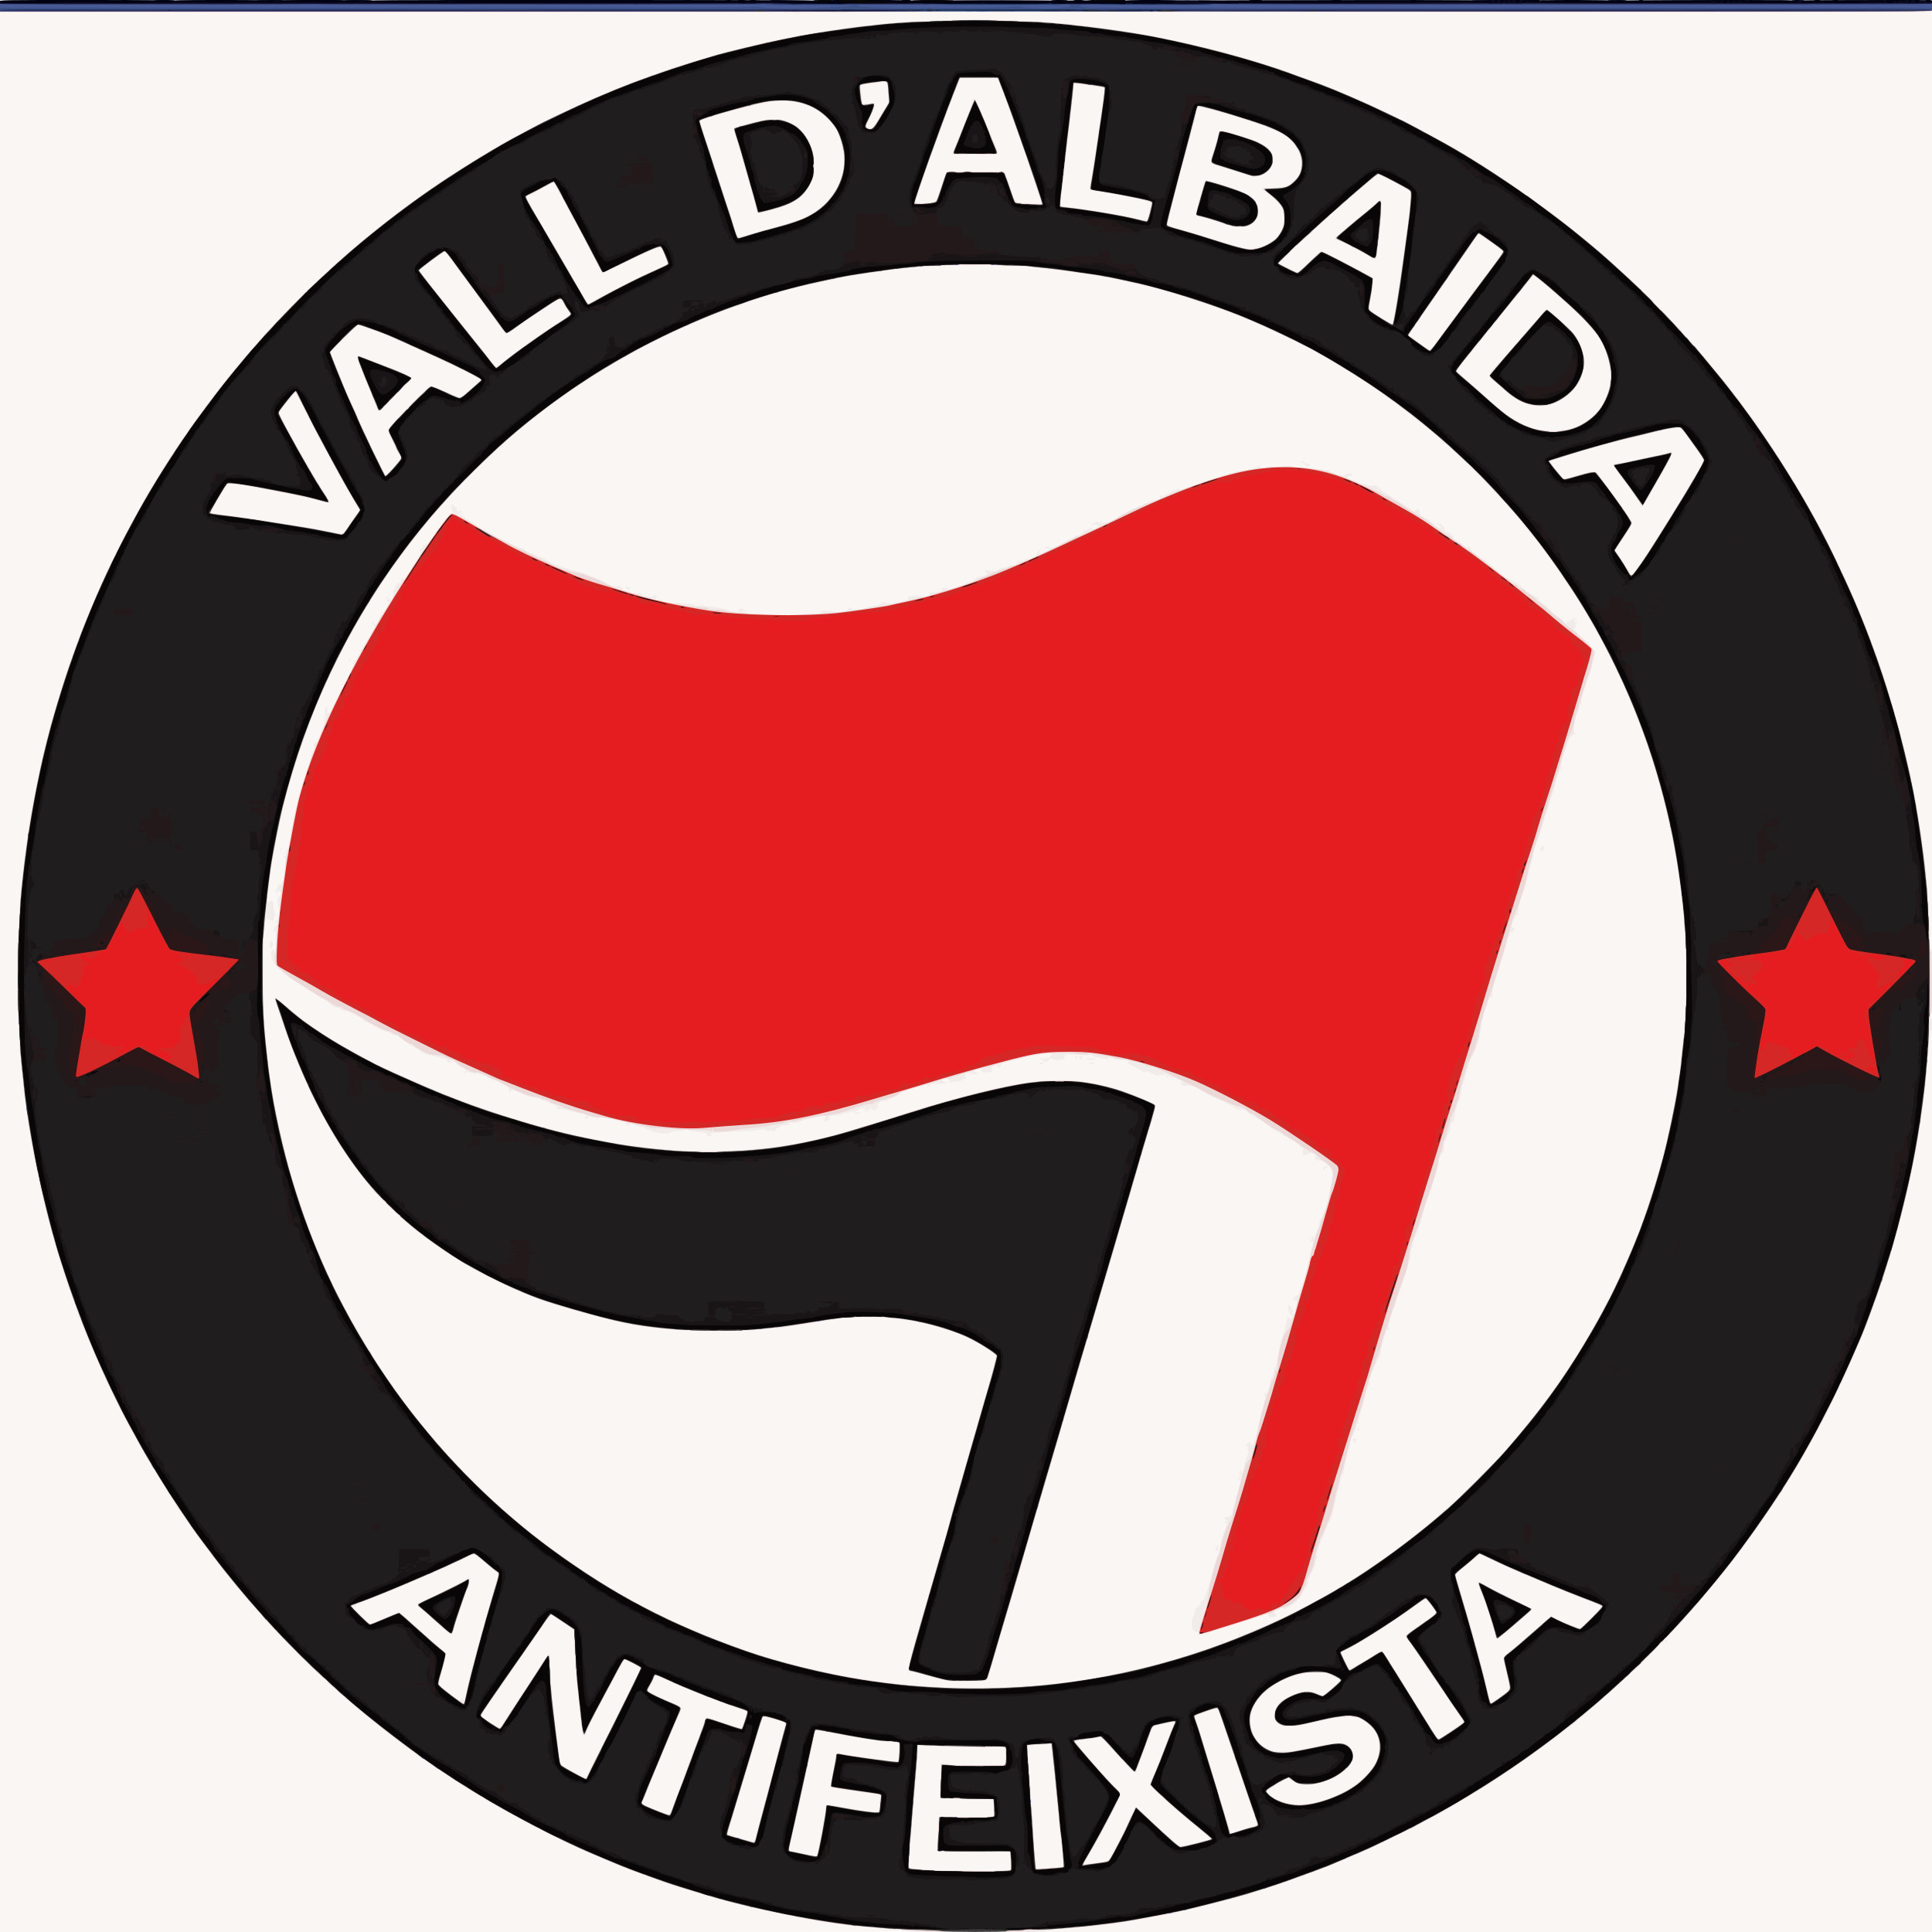 Vall D'Albaida antifeixista